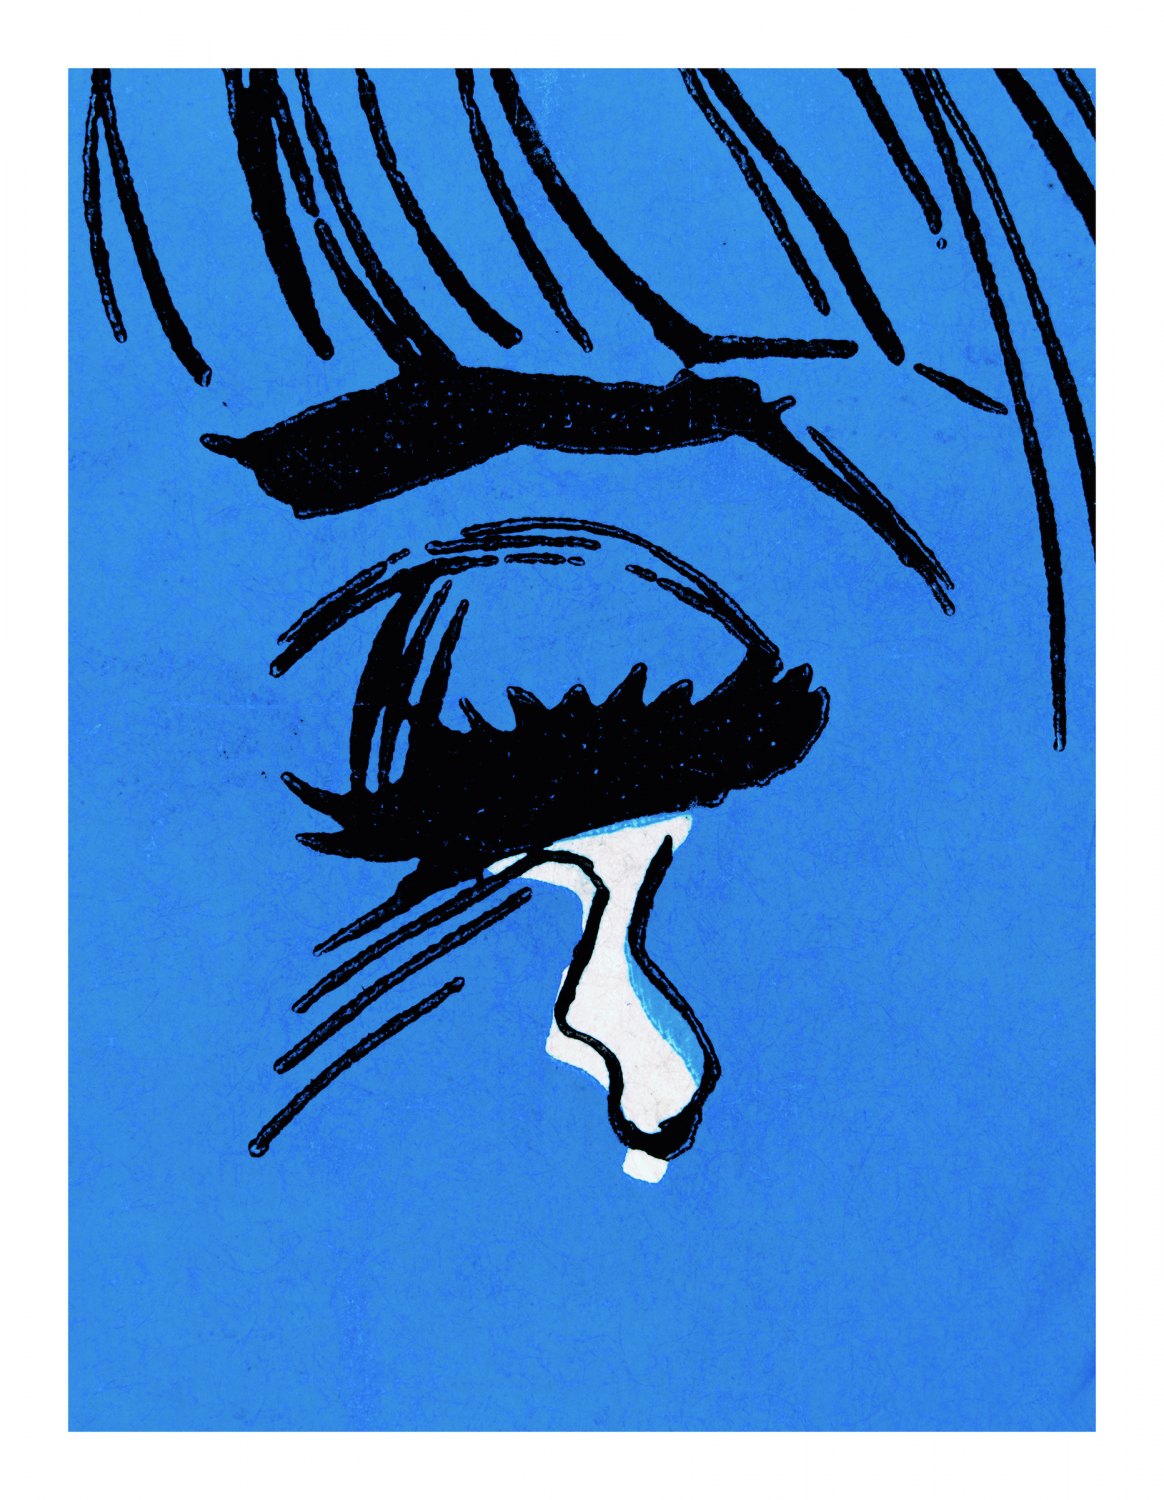 Anne Collier Woman Crying (Comic) #14, 2019 C-print, 164 x 126 (cm)